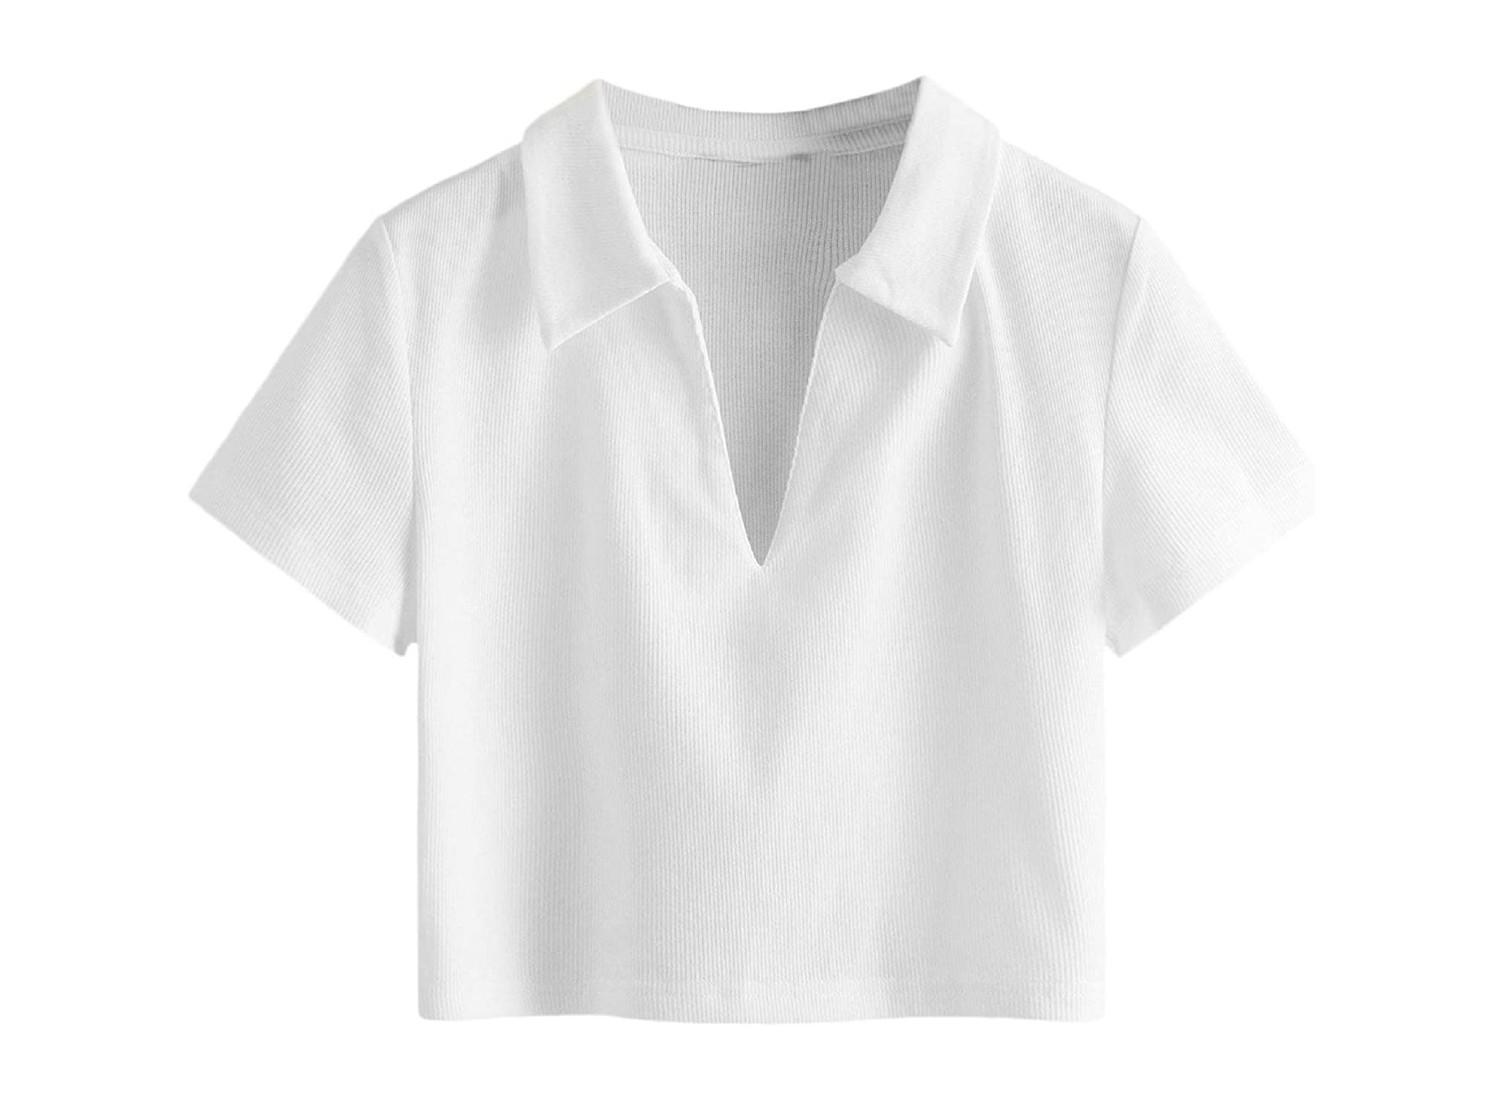 A white sweatyrocks tee shirt on a white background.